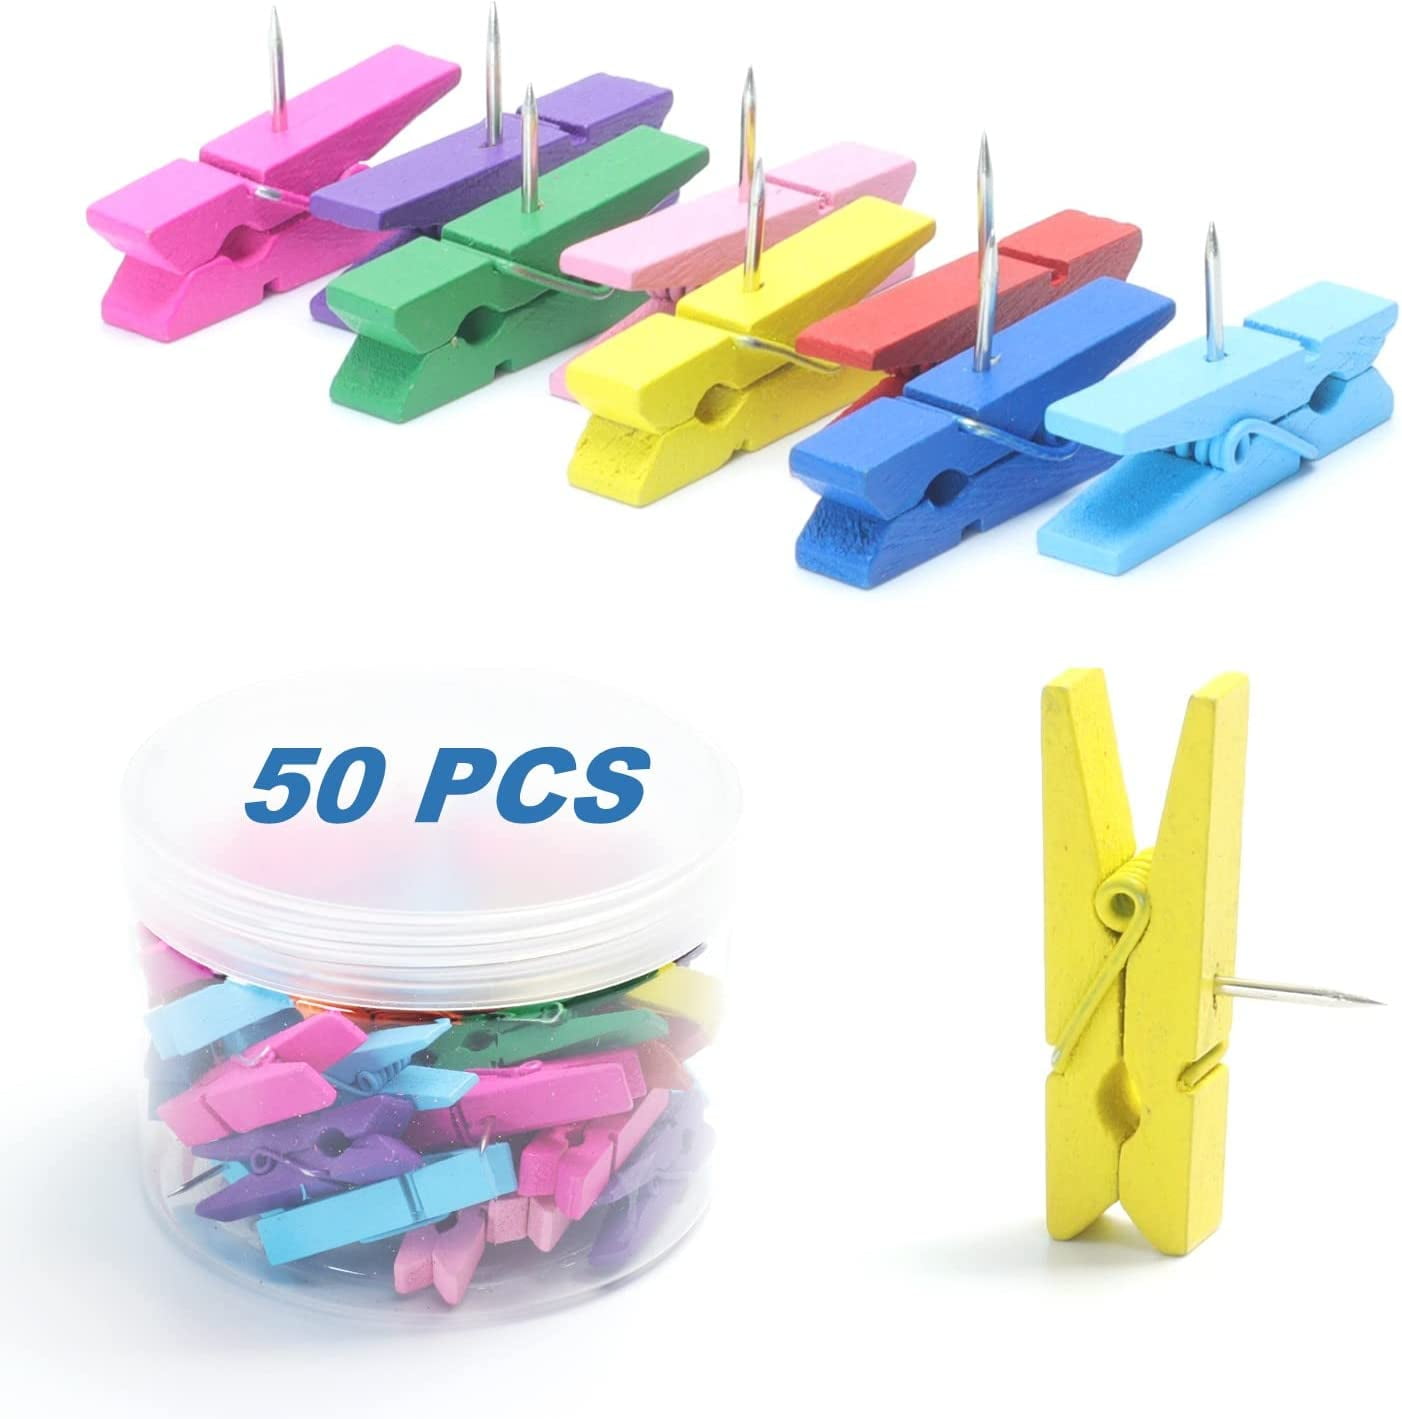 Office & School Presentation Supplies Pins Thumbtacks - 674171 - Clear Push  Pins-50 Ct